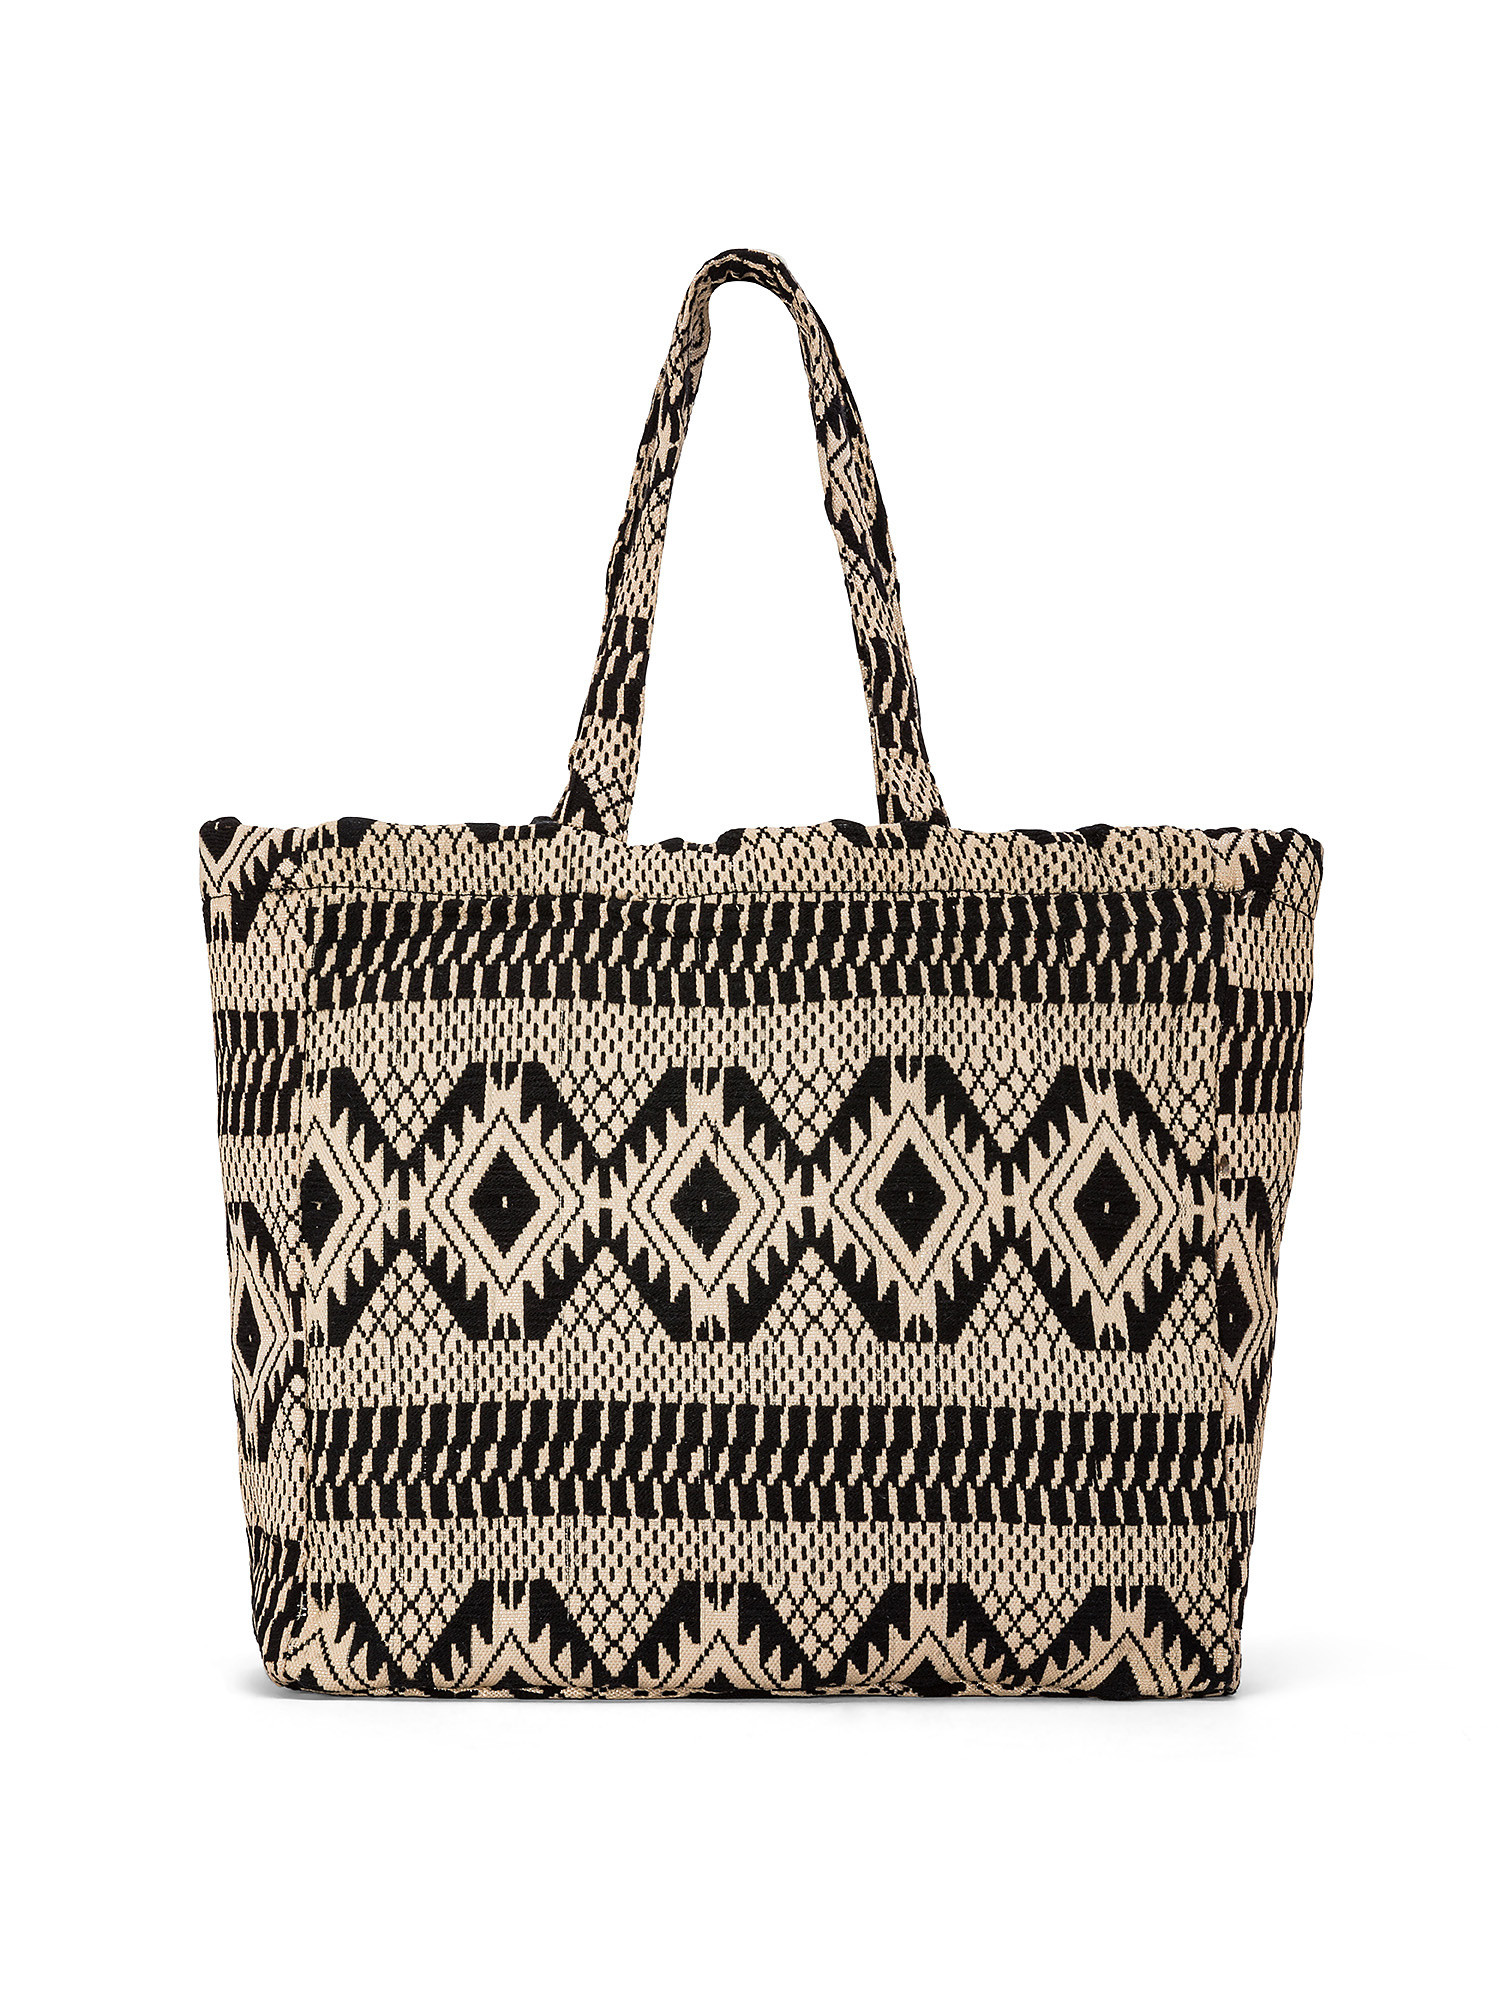 Koan - Shopping bag a fantasia, Marrone, large image number 0